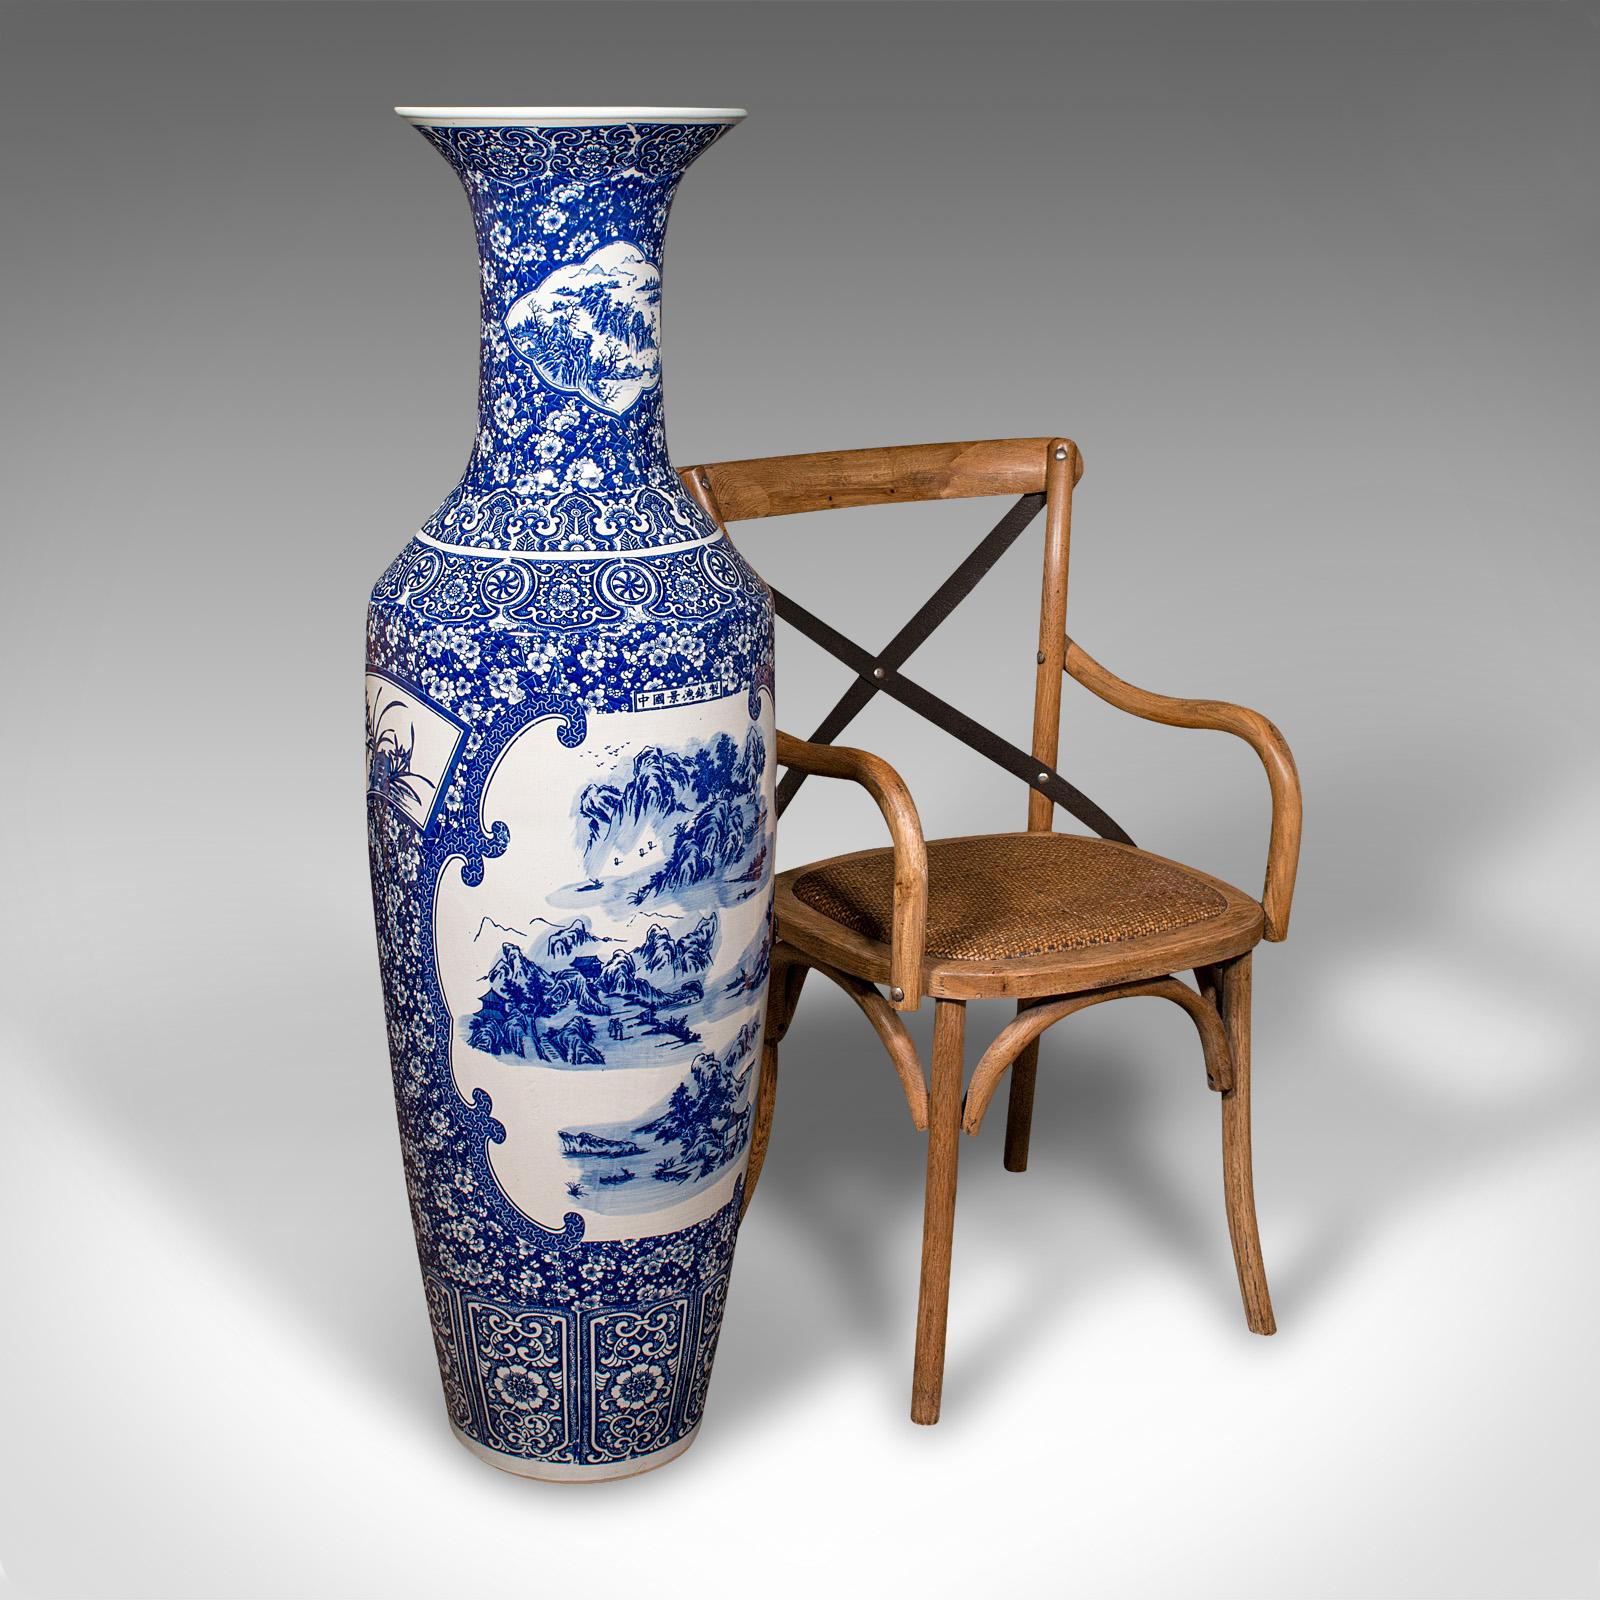 4' Tall Vintage Floor Vase, Chinese, Blue & White, Ceramic, Display, Art Deco For Sale 8